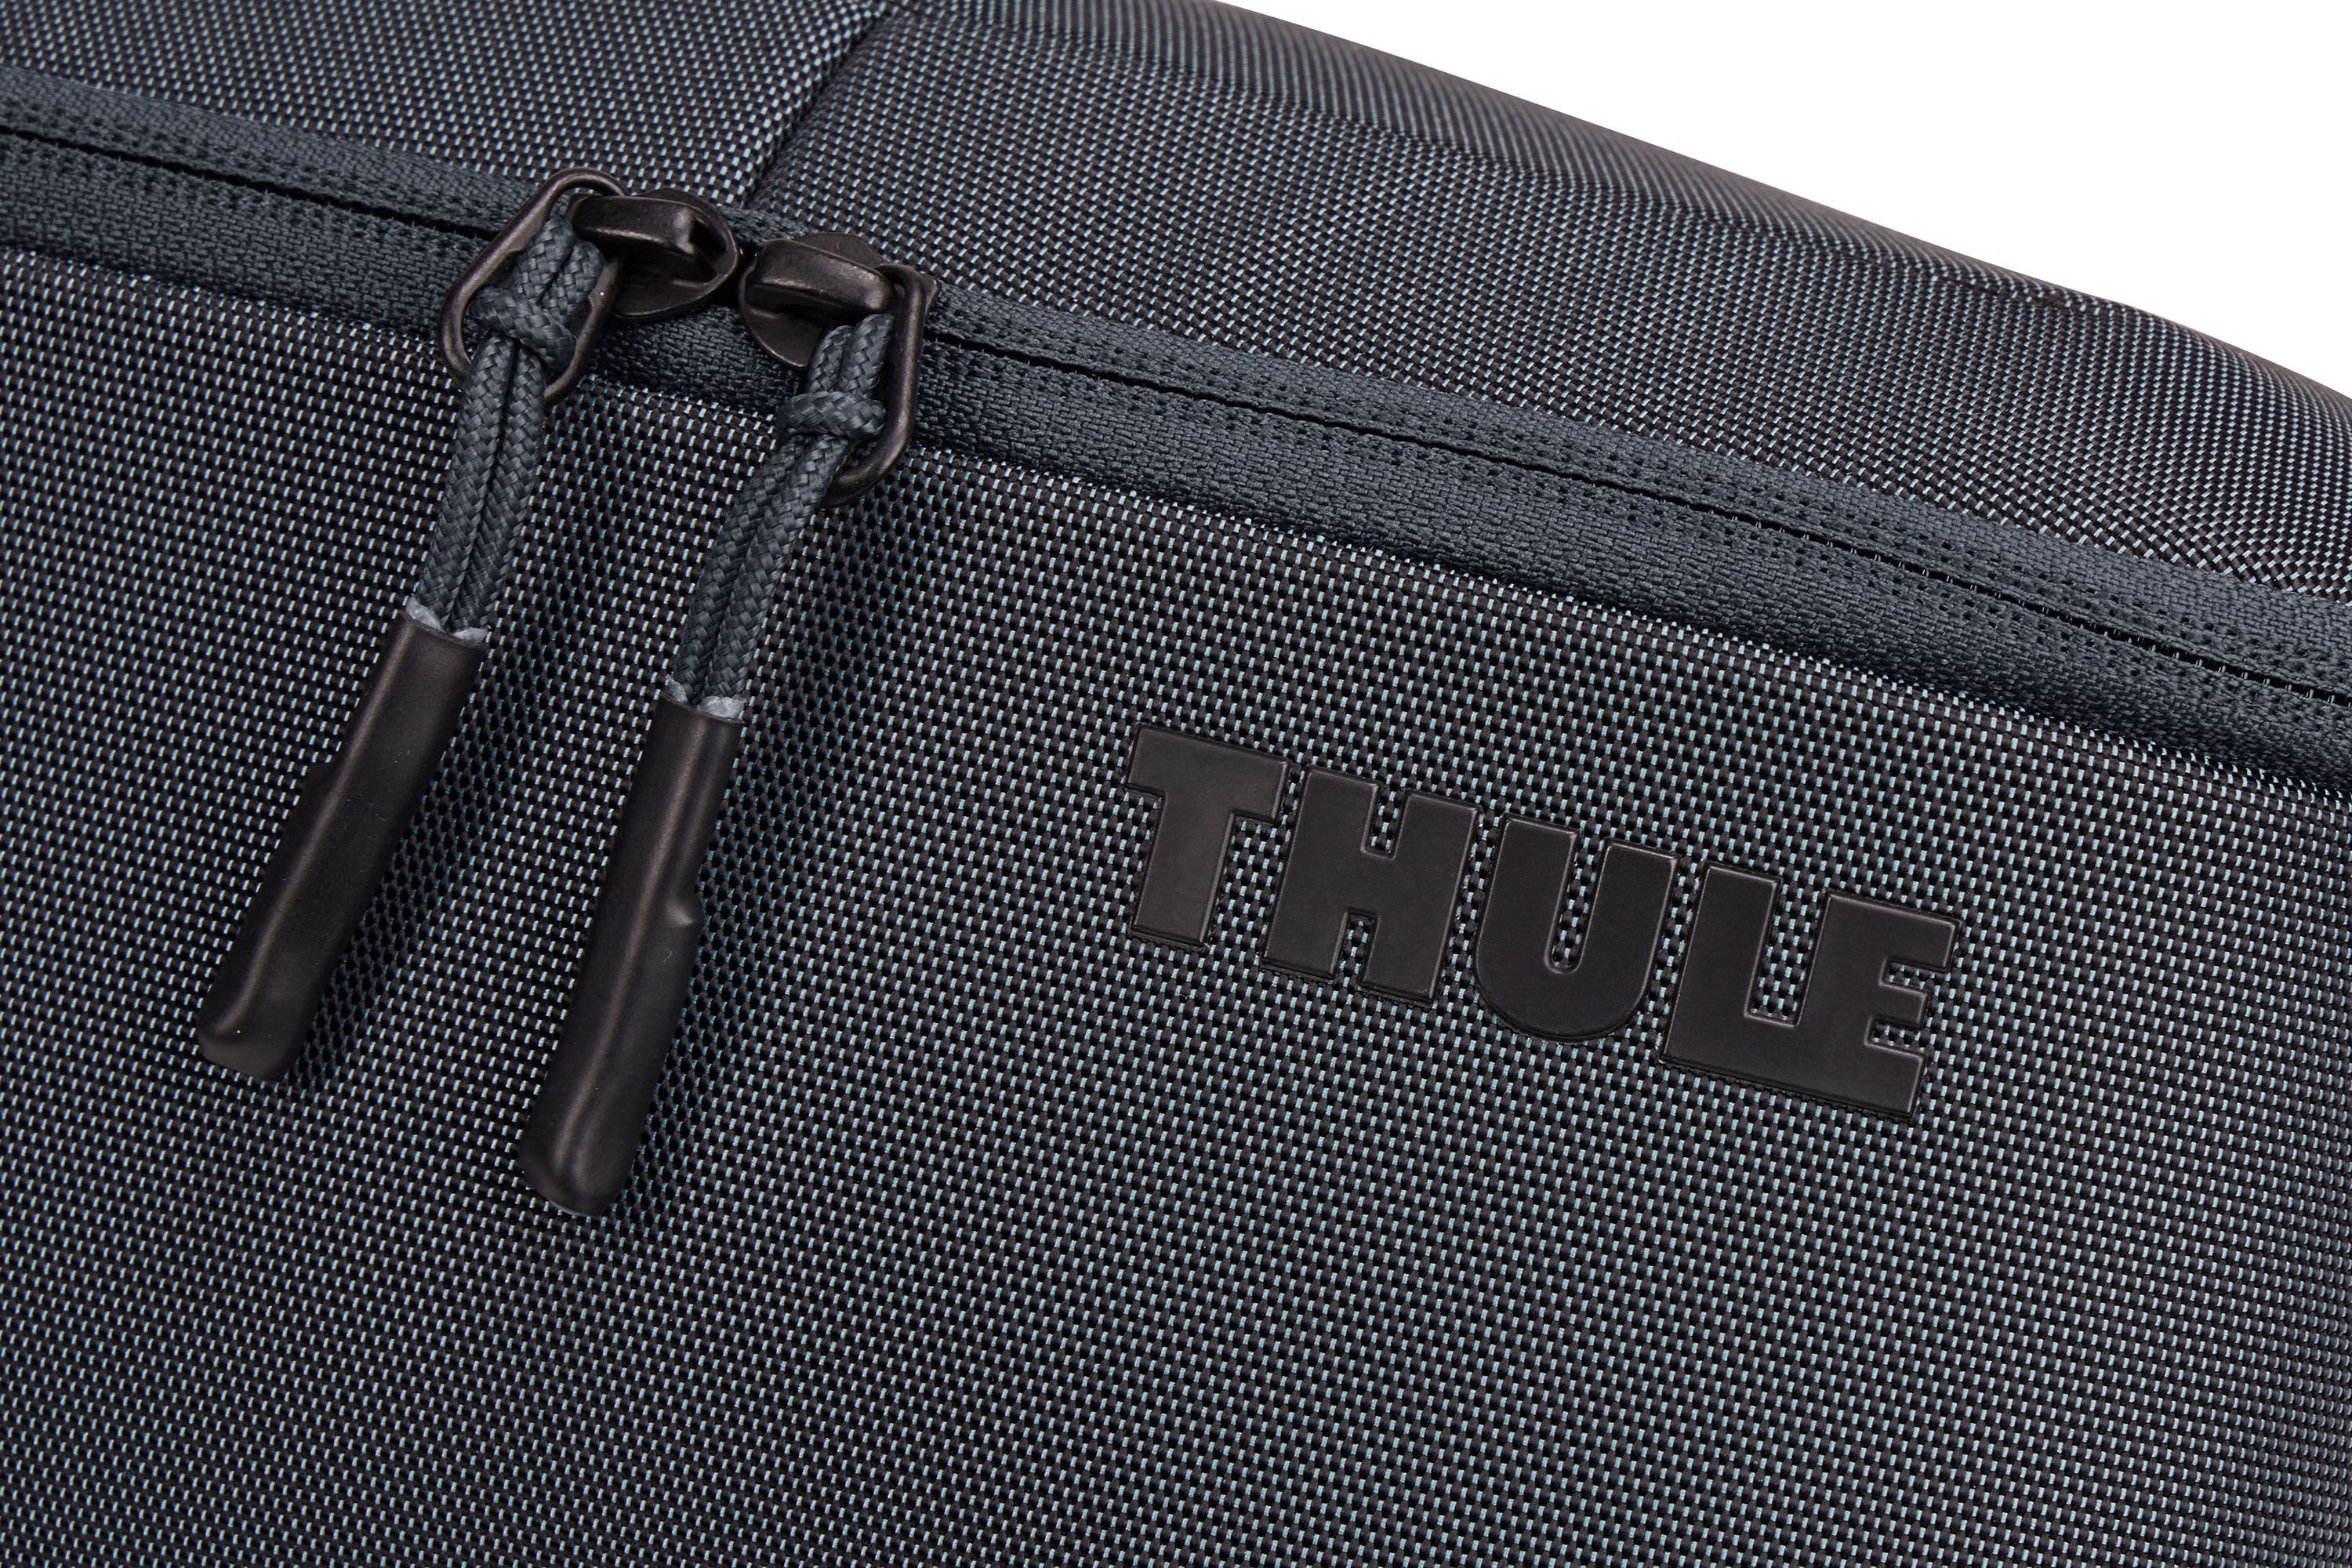 Thule Subterra Toiletry Bag